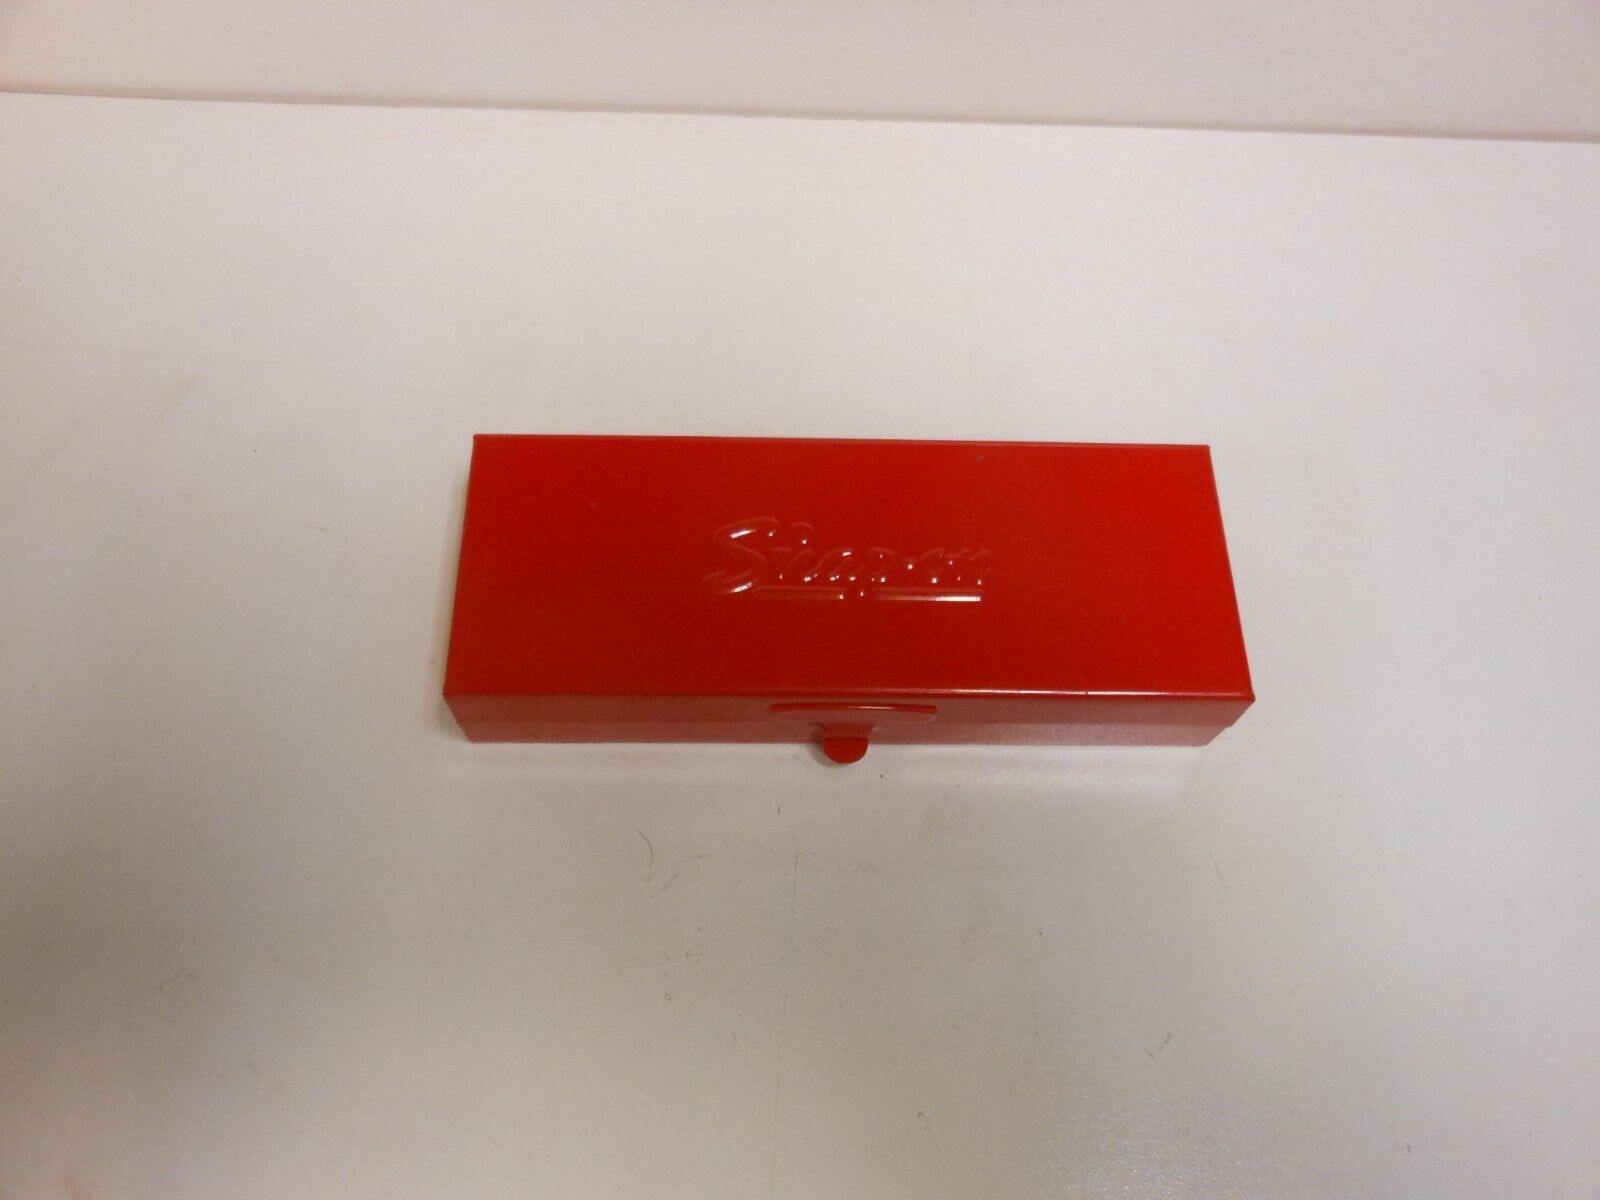 Vtg Snap-on Tools KRA 222B Red Metal Tool Box 1/4 Drive 64 Date Code